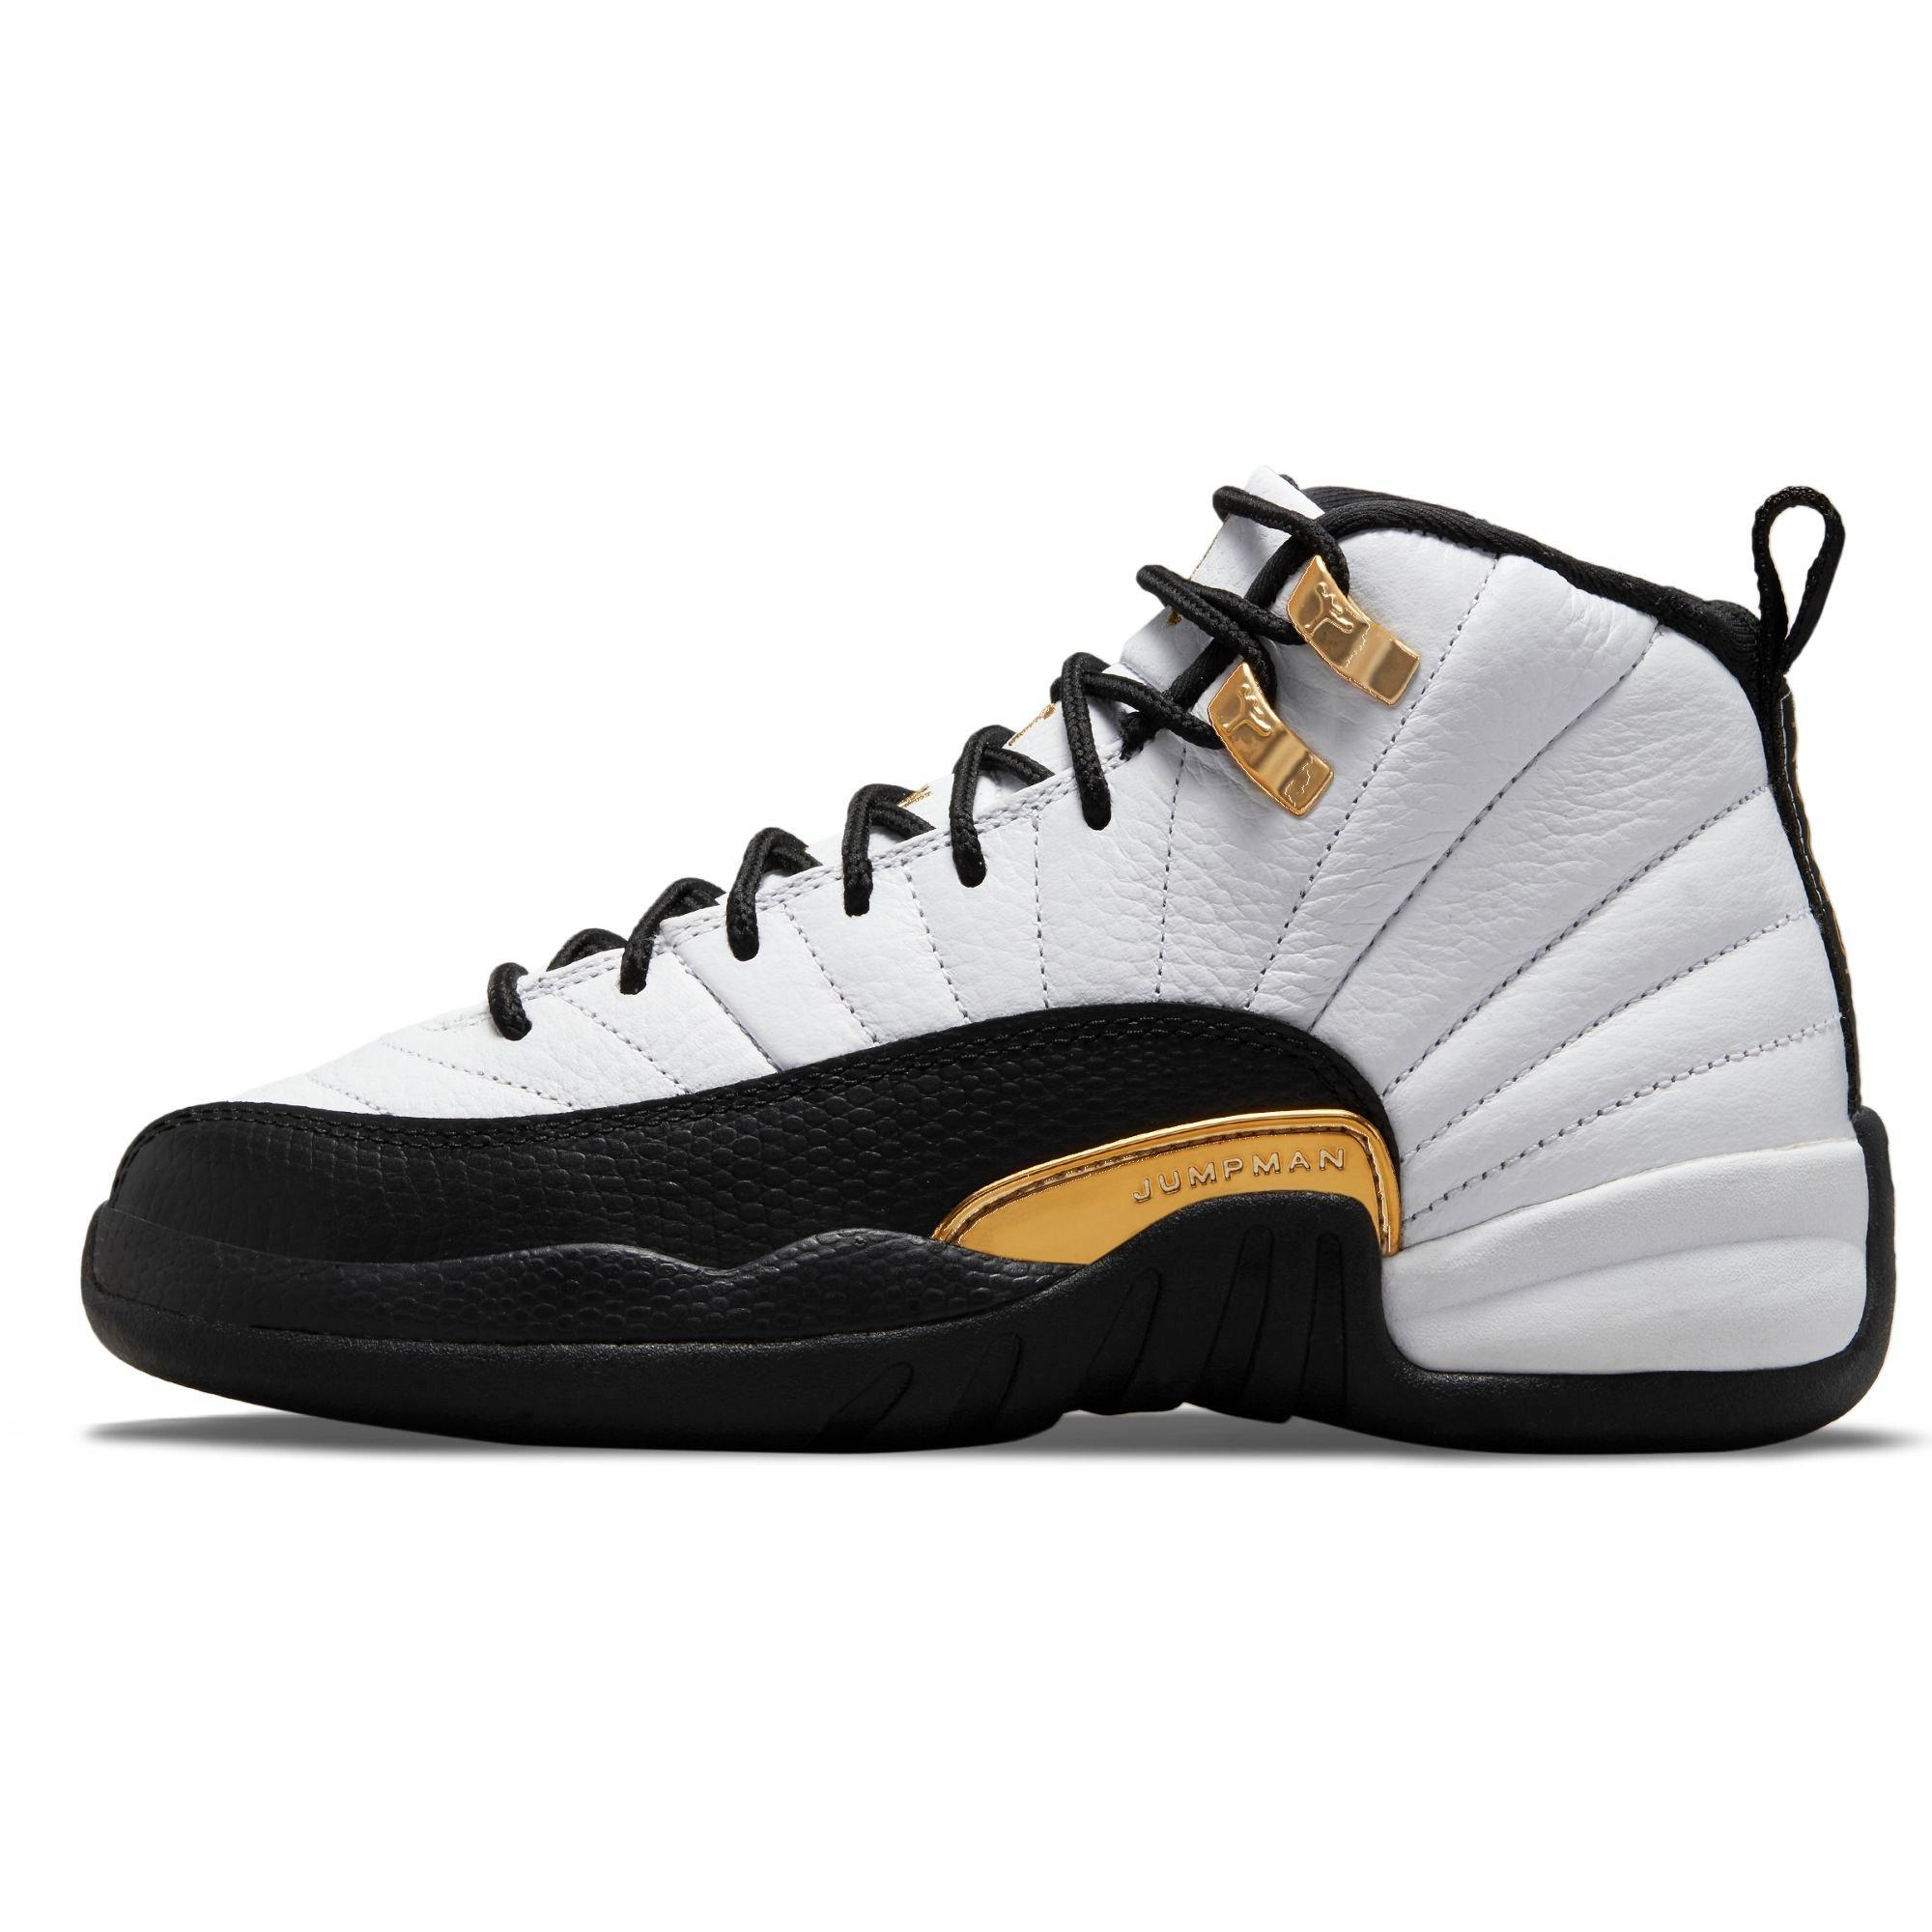 Jordan 12 Retro White/Metallic Gold/Black Men's Shoe - Hibbett